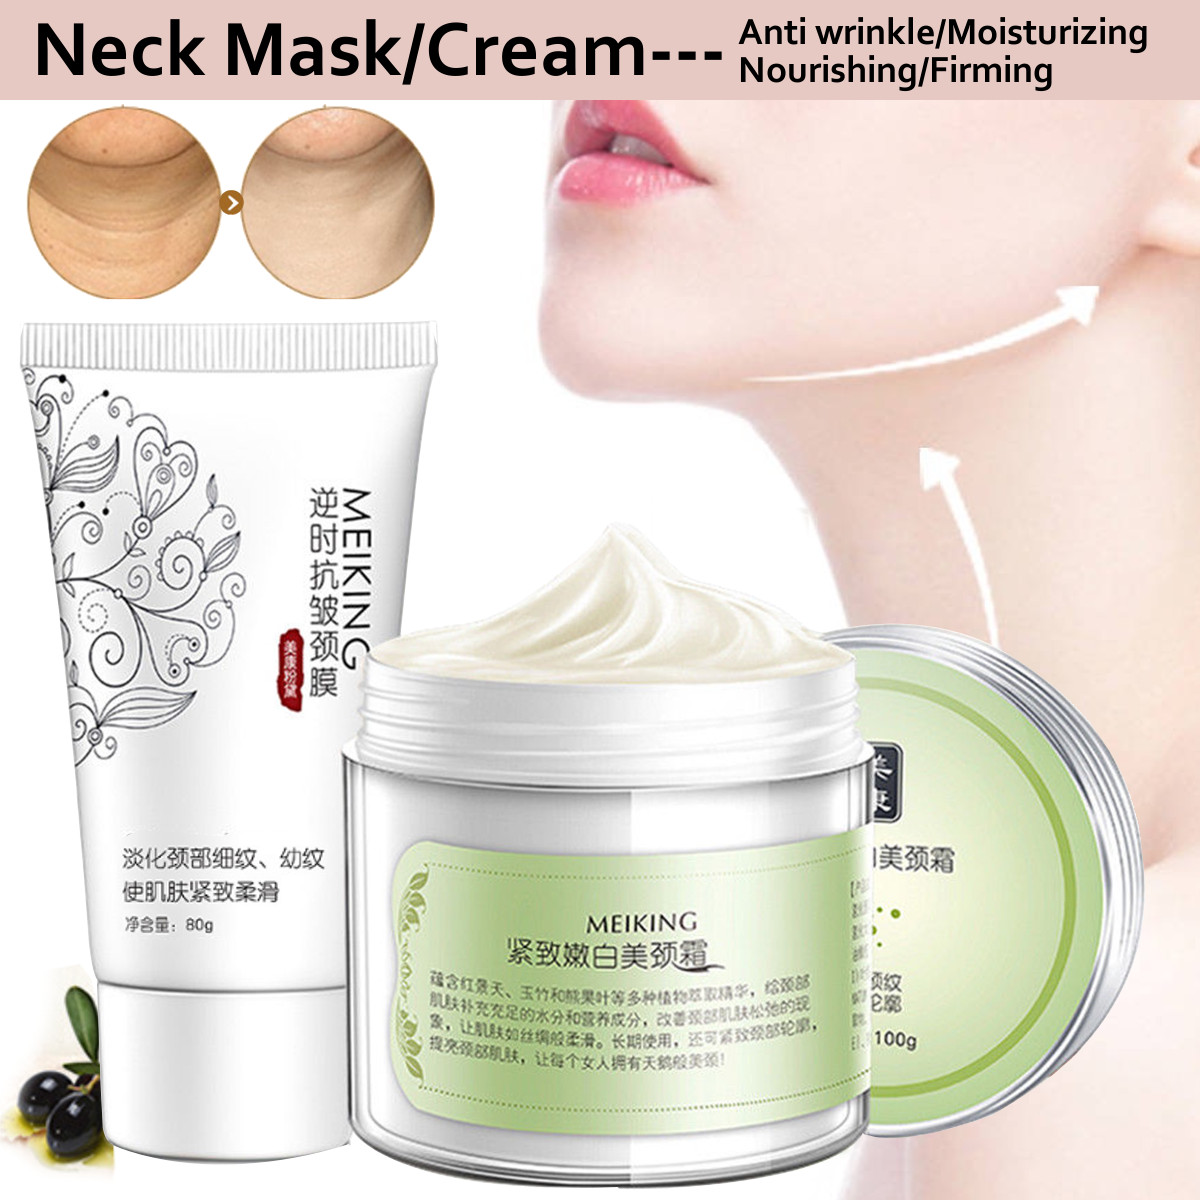 

MEIKING Neck Mask Cream Anti Wrinkle Moisturizing Nourishing Firming Cream